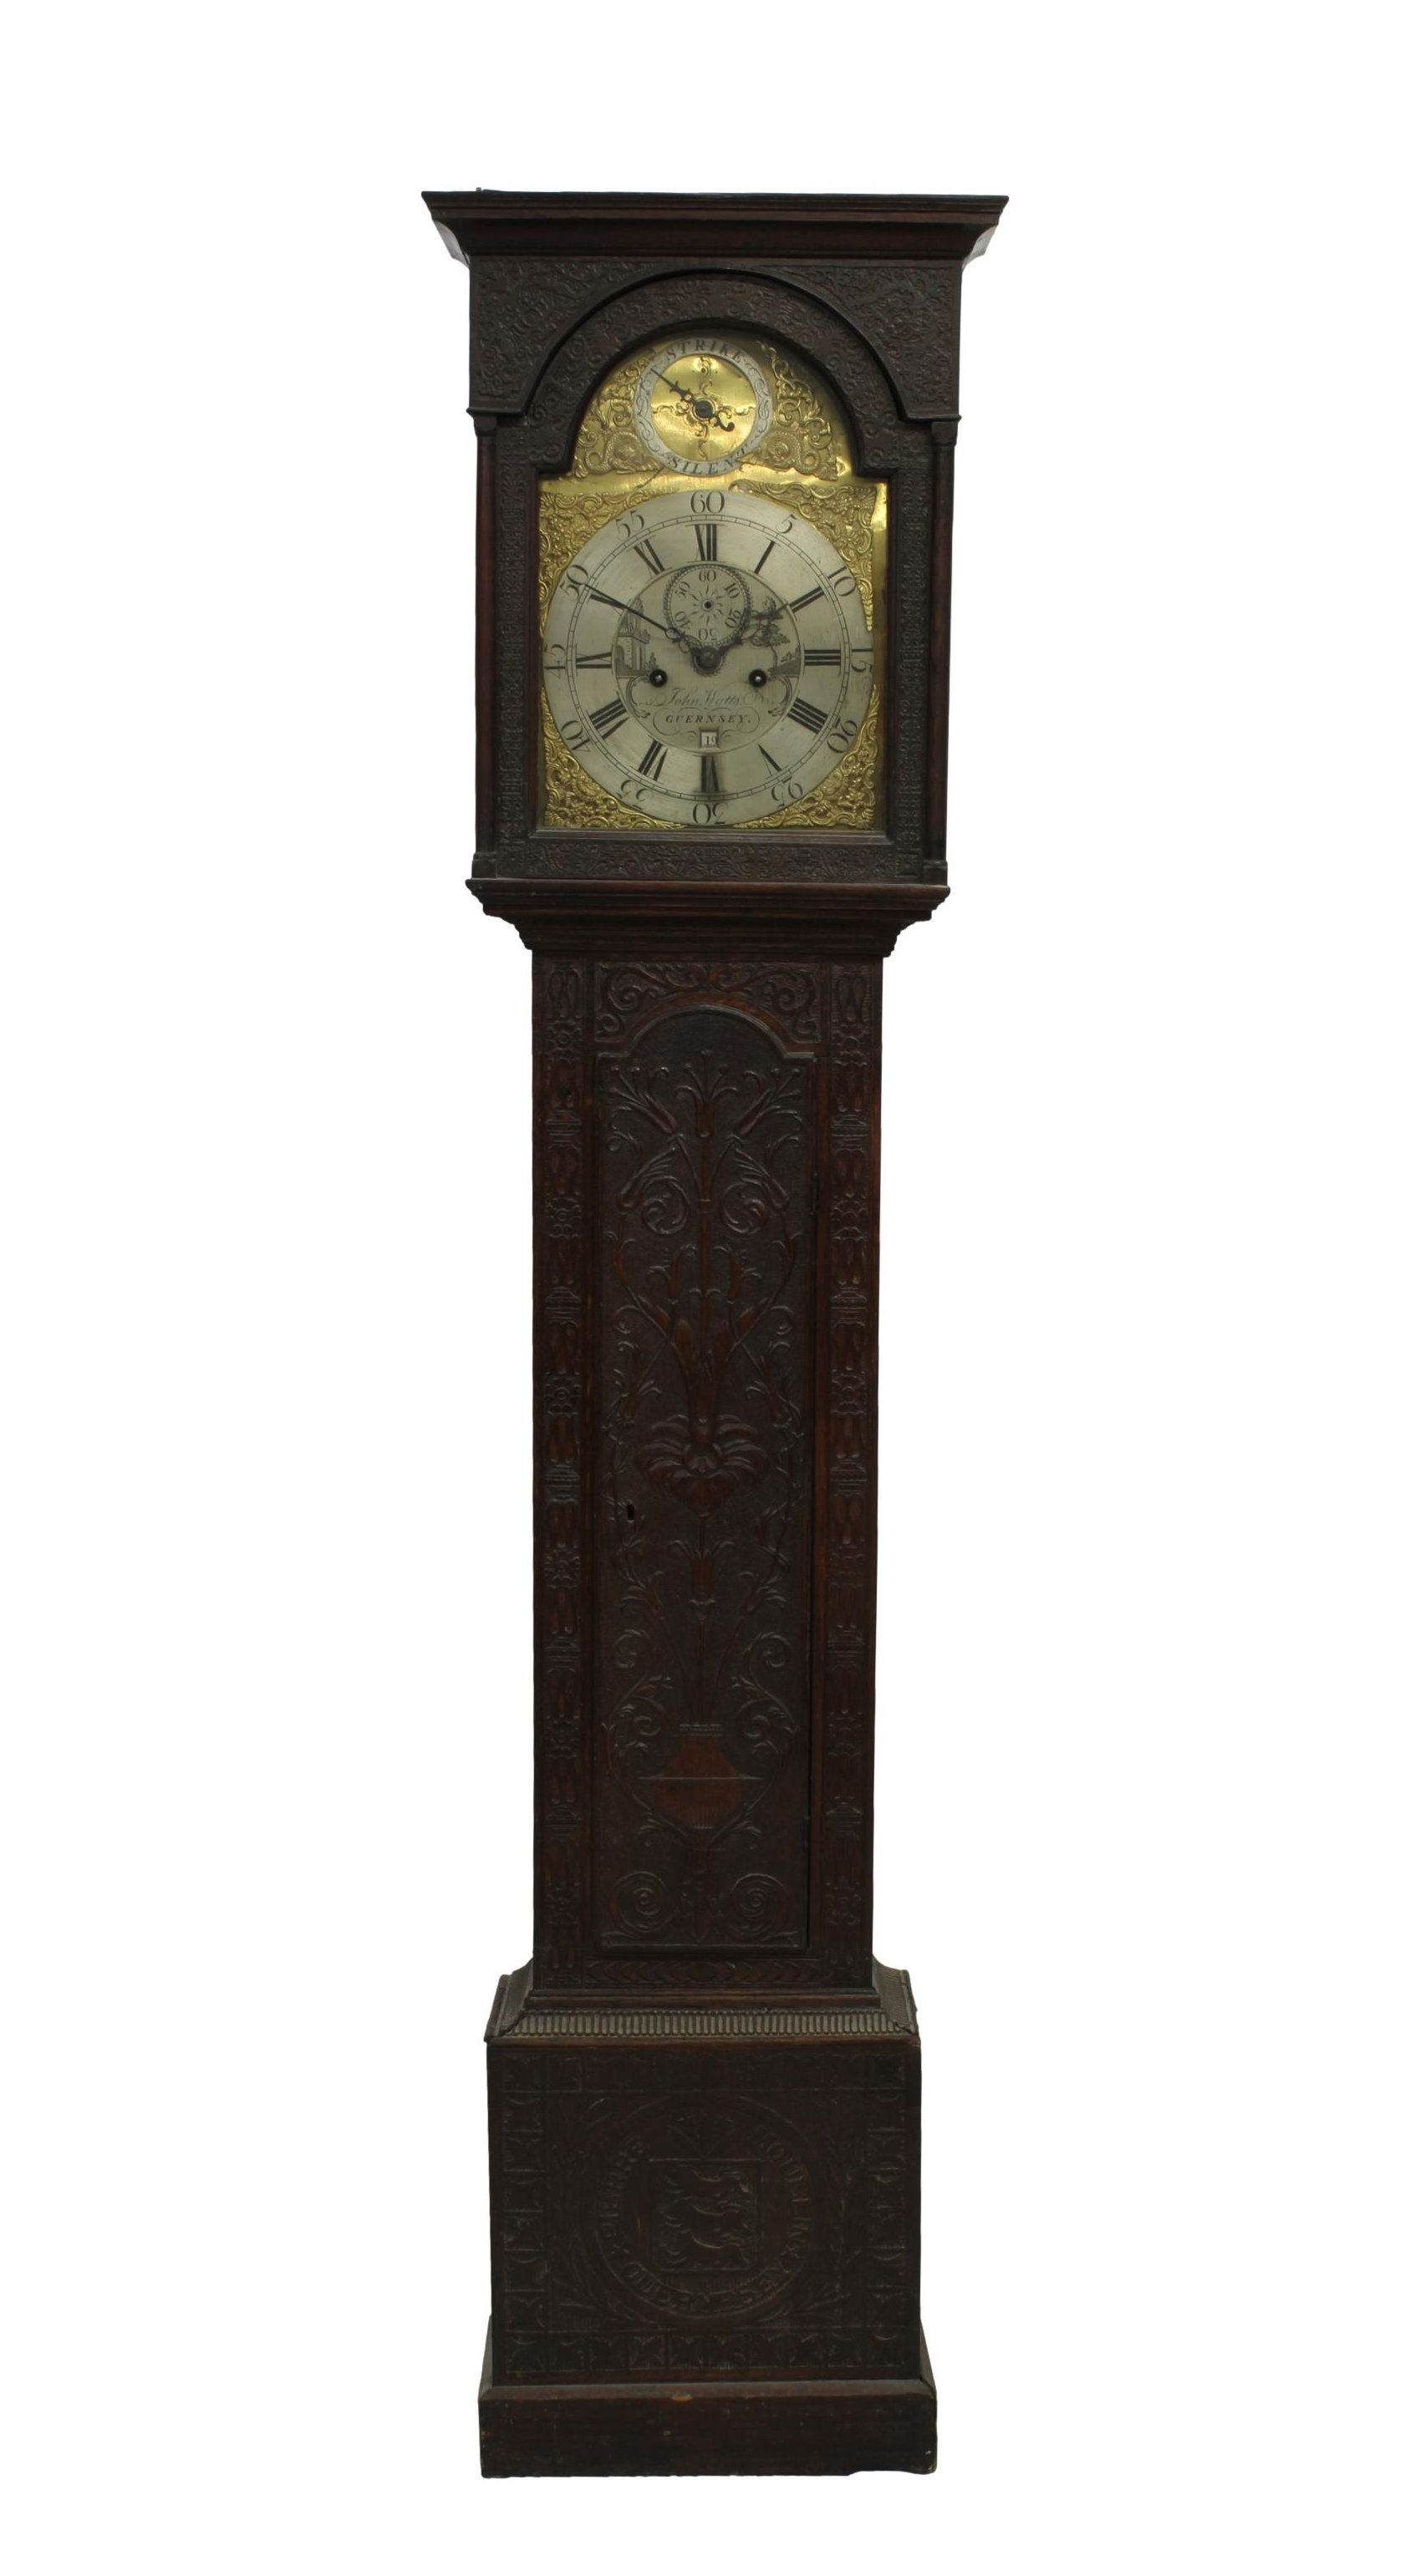 An 18th century Channel Island longcase clock